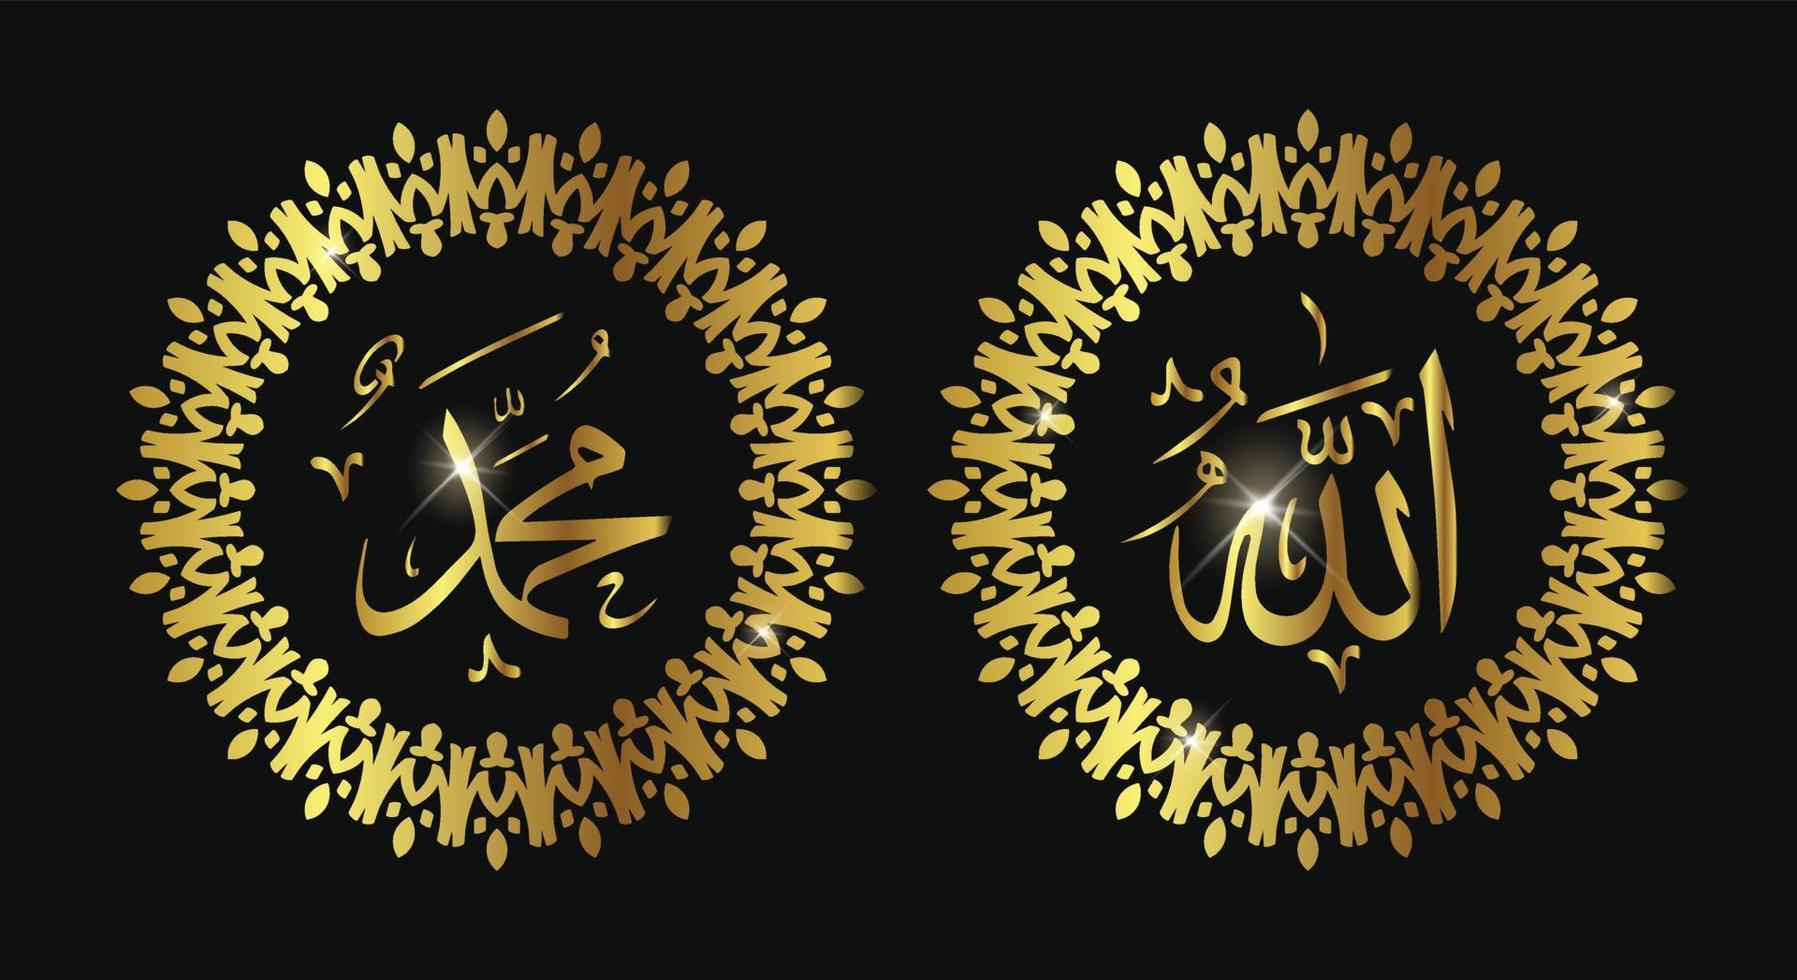 Allah Muhammad arabic calligraphy, Islamic wall art decoration vector